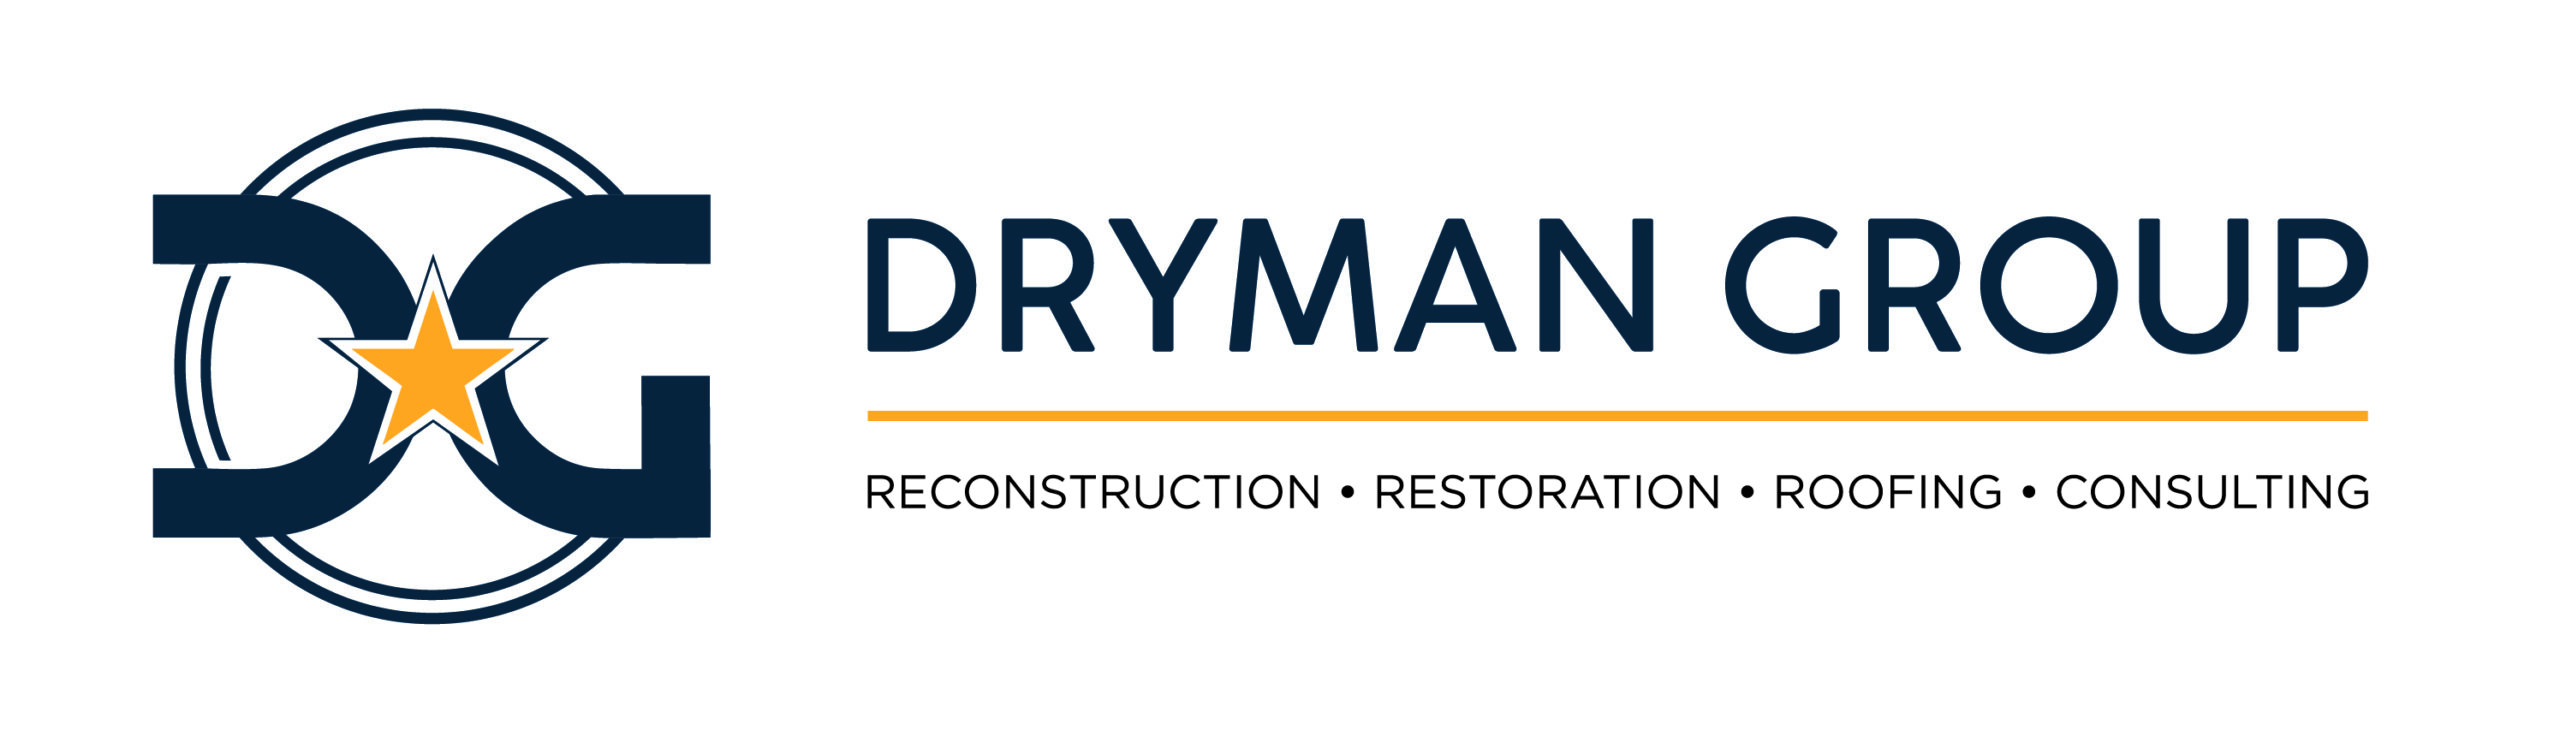 dryman restoration dark logo